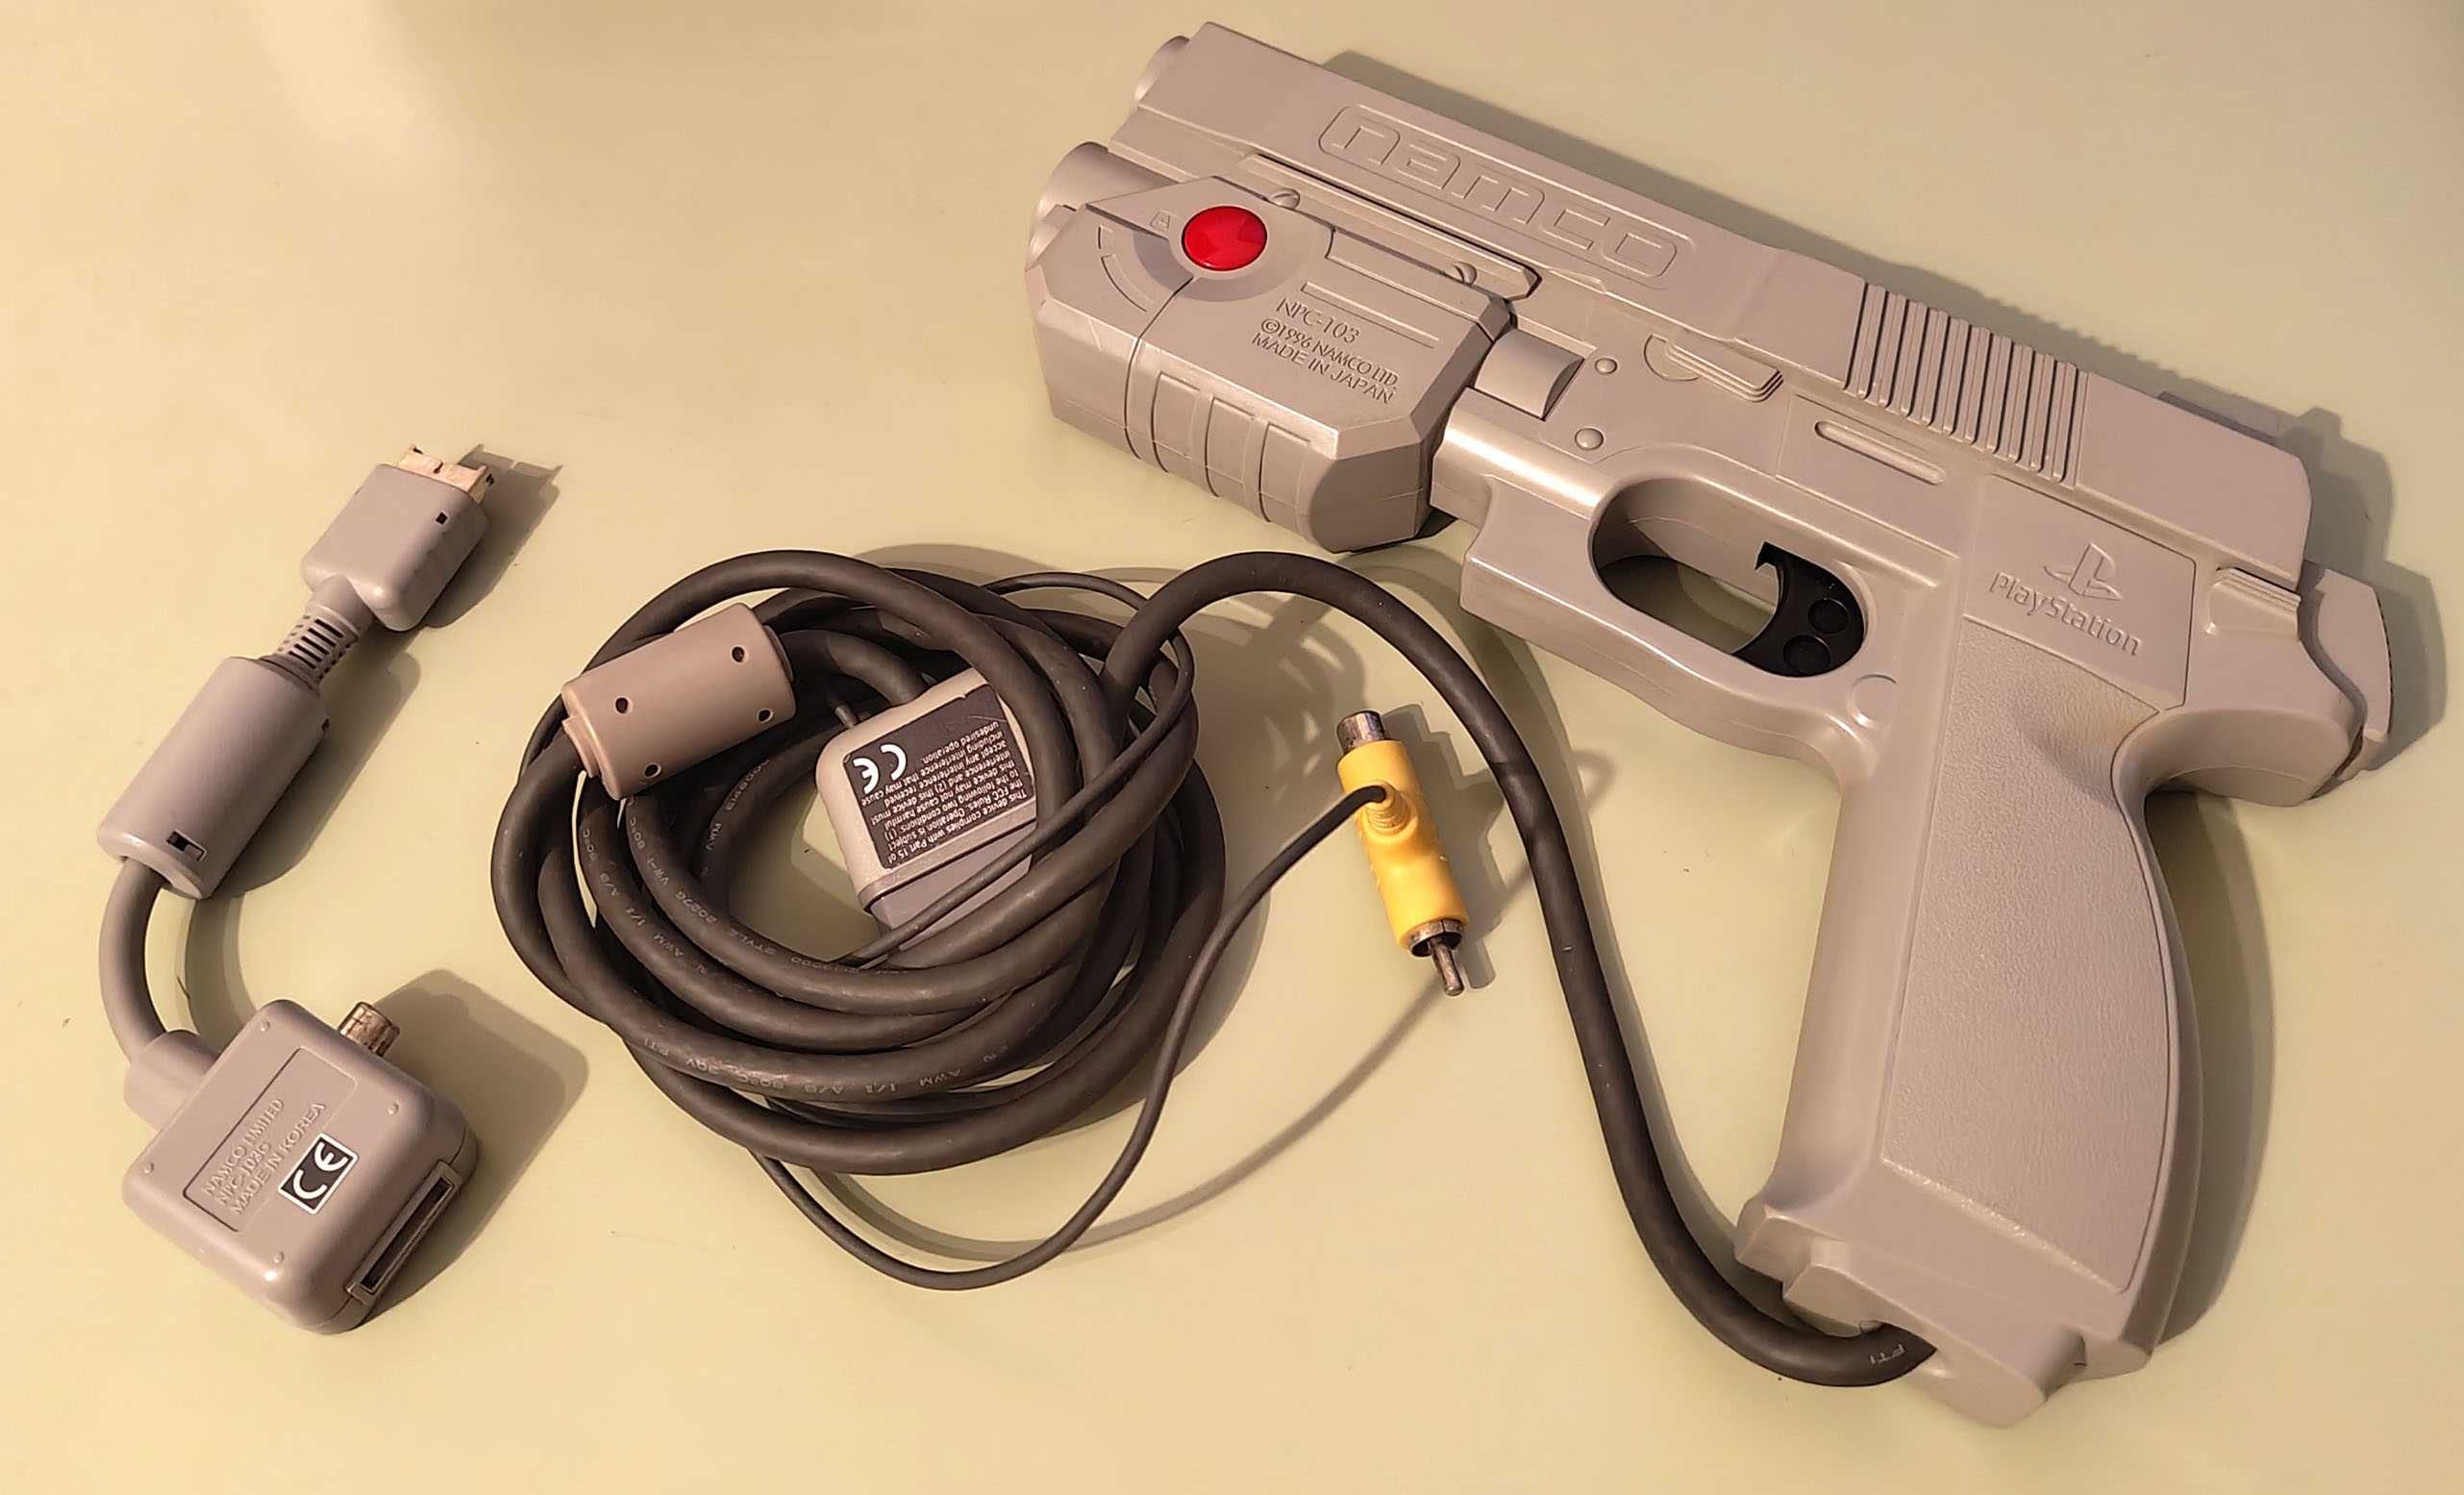 Pistol Namco NPC-103 cu adaptor video si jocuri Point Blank 1 si 2